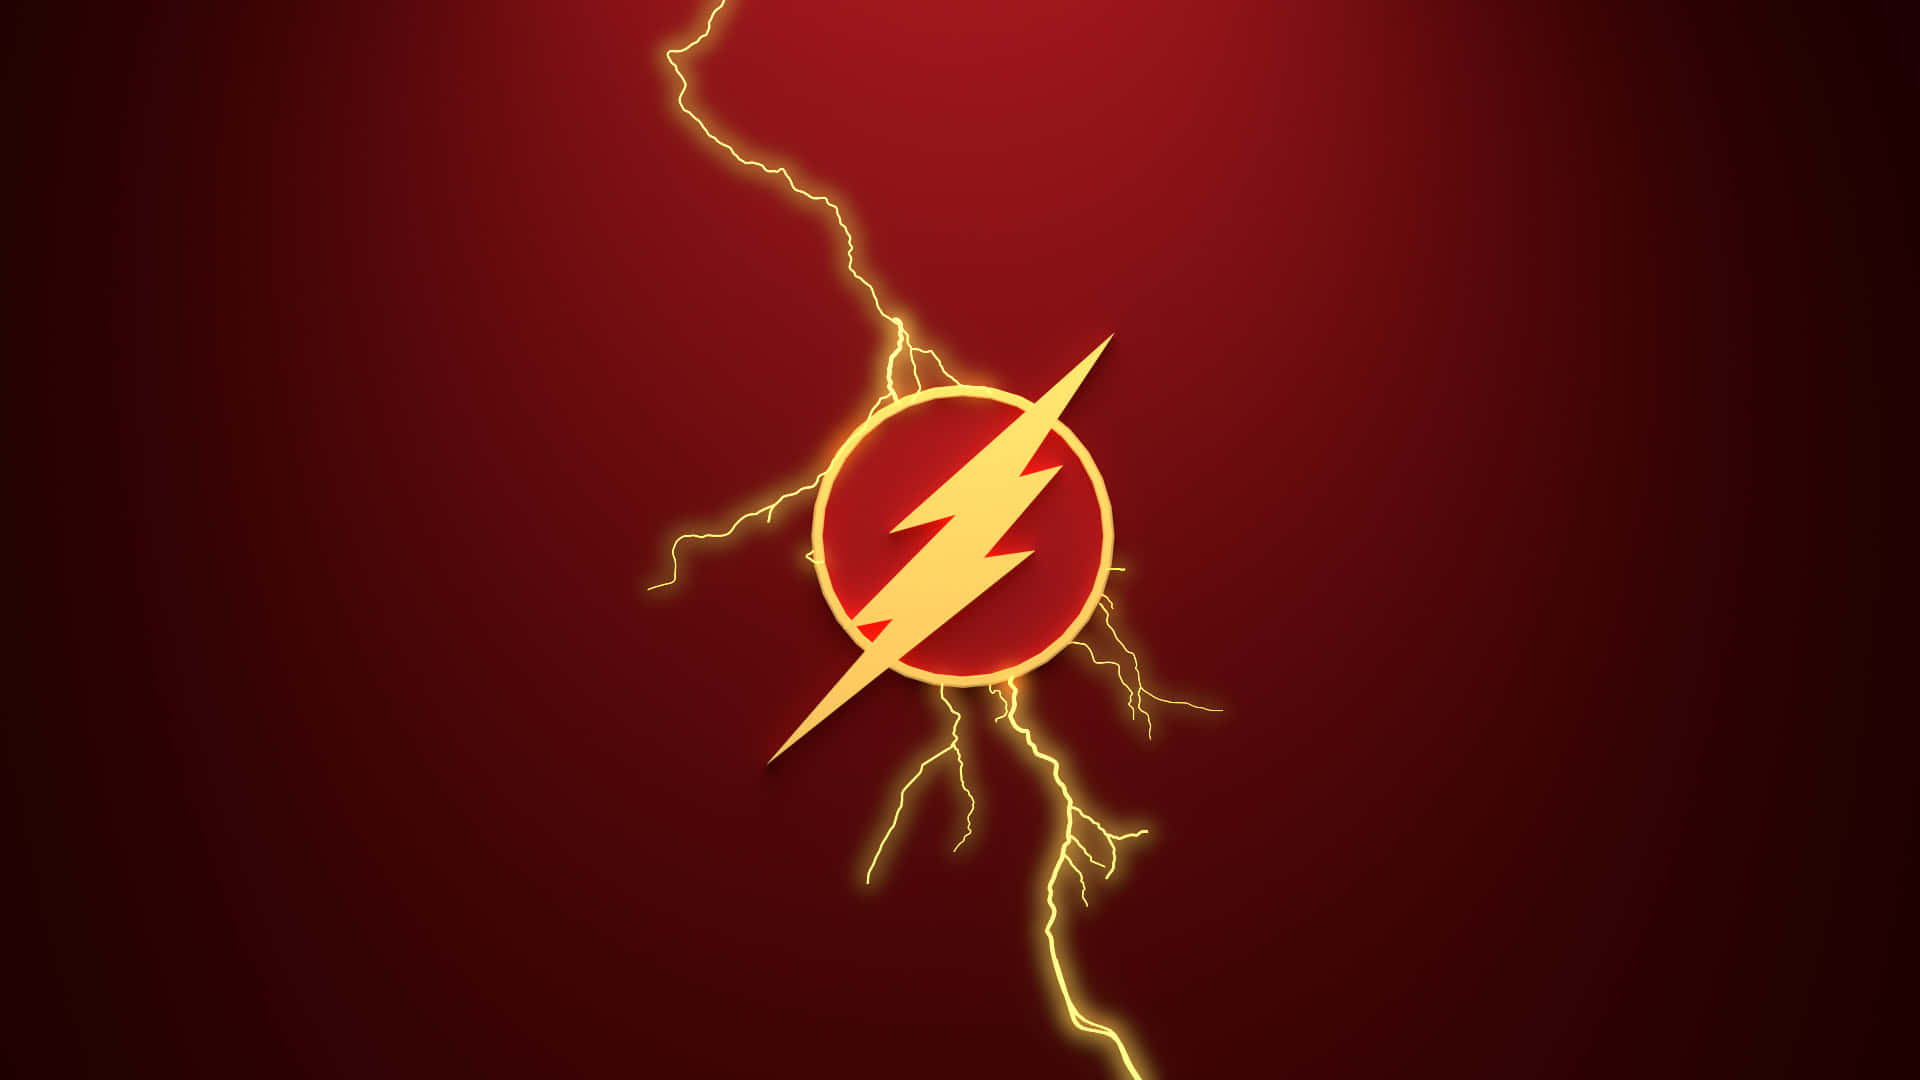 Barryallen Springer Med Supersnabbheten Hos The Flash